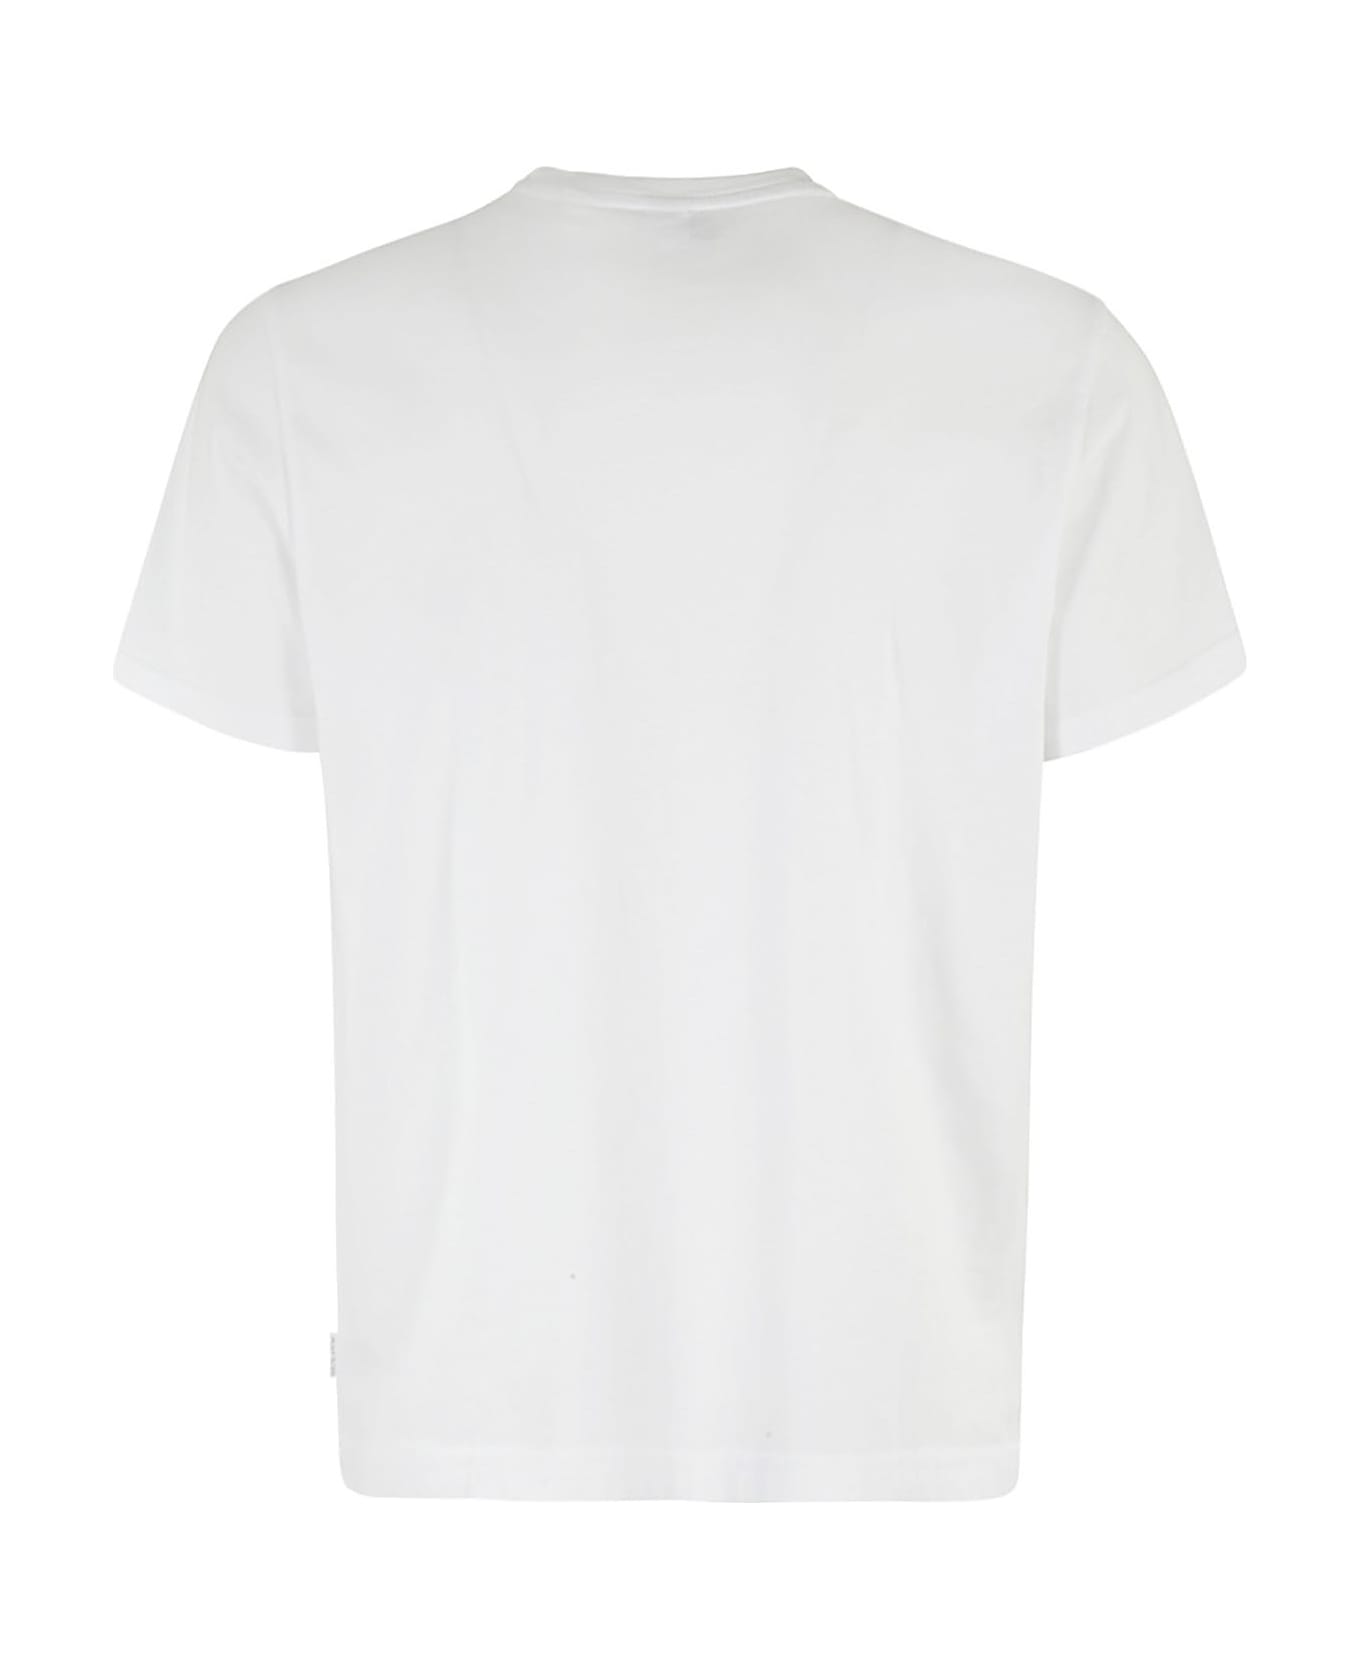 Aspesi T-shirt Silenzio - Bianco シャツ